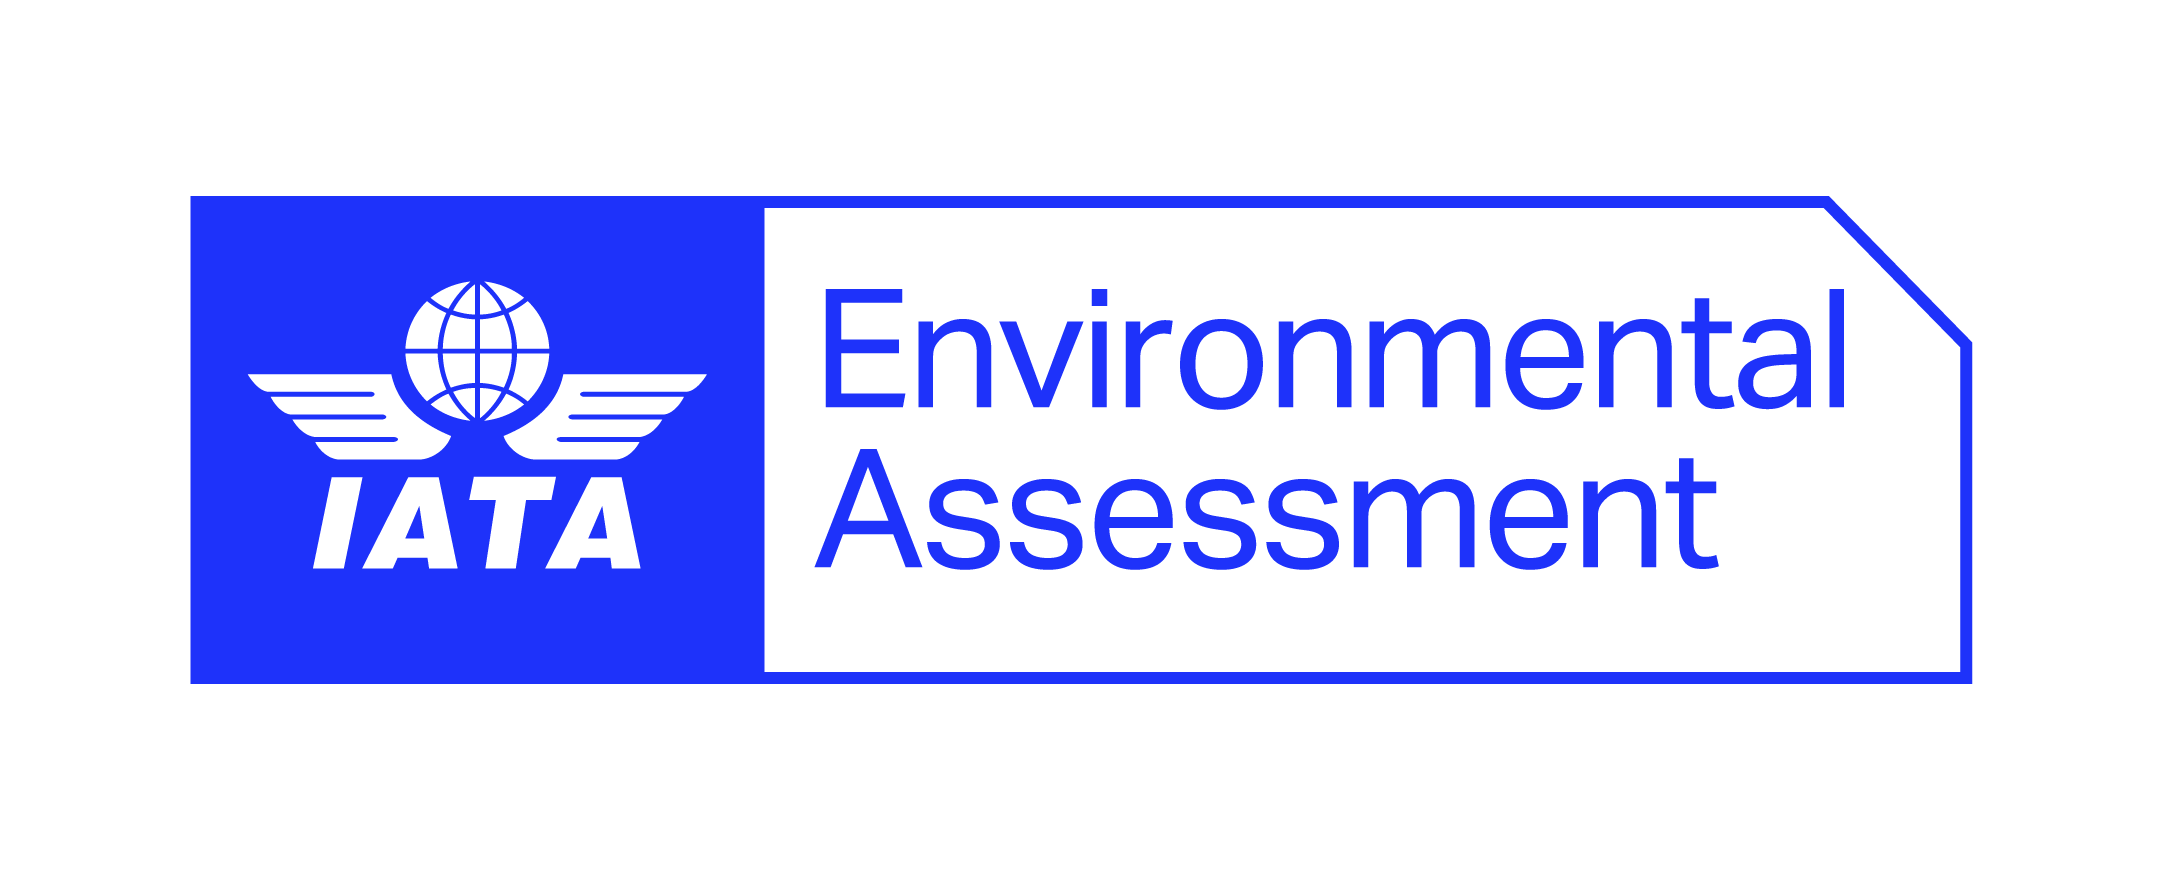 IATA | Environmental Assessment Logo